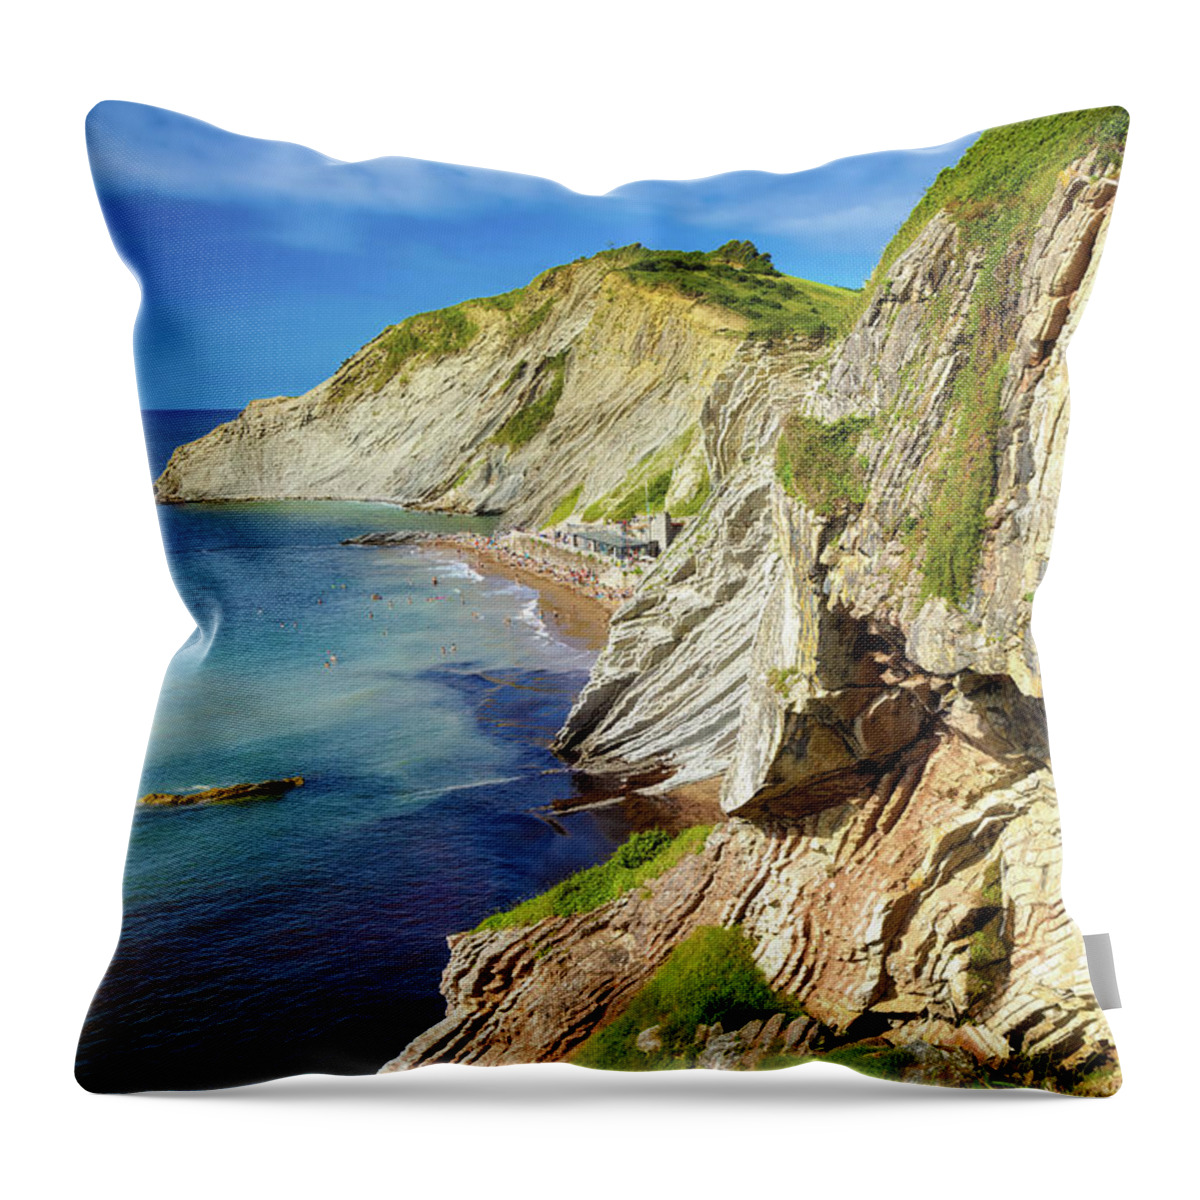 Euskadi Throw Pillow featuring the photograph Zumaya Flysch Cliffs, Gipuzkoa - Orton glow Edition by Jordi Carrio Jamila